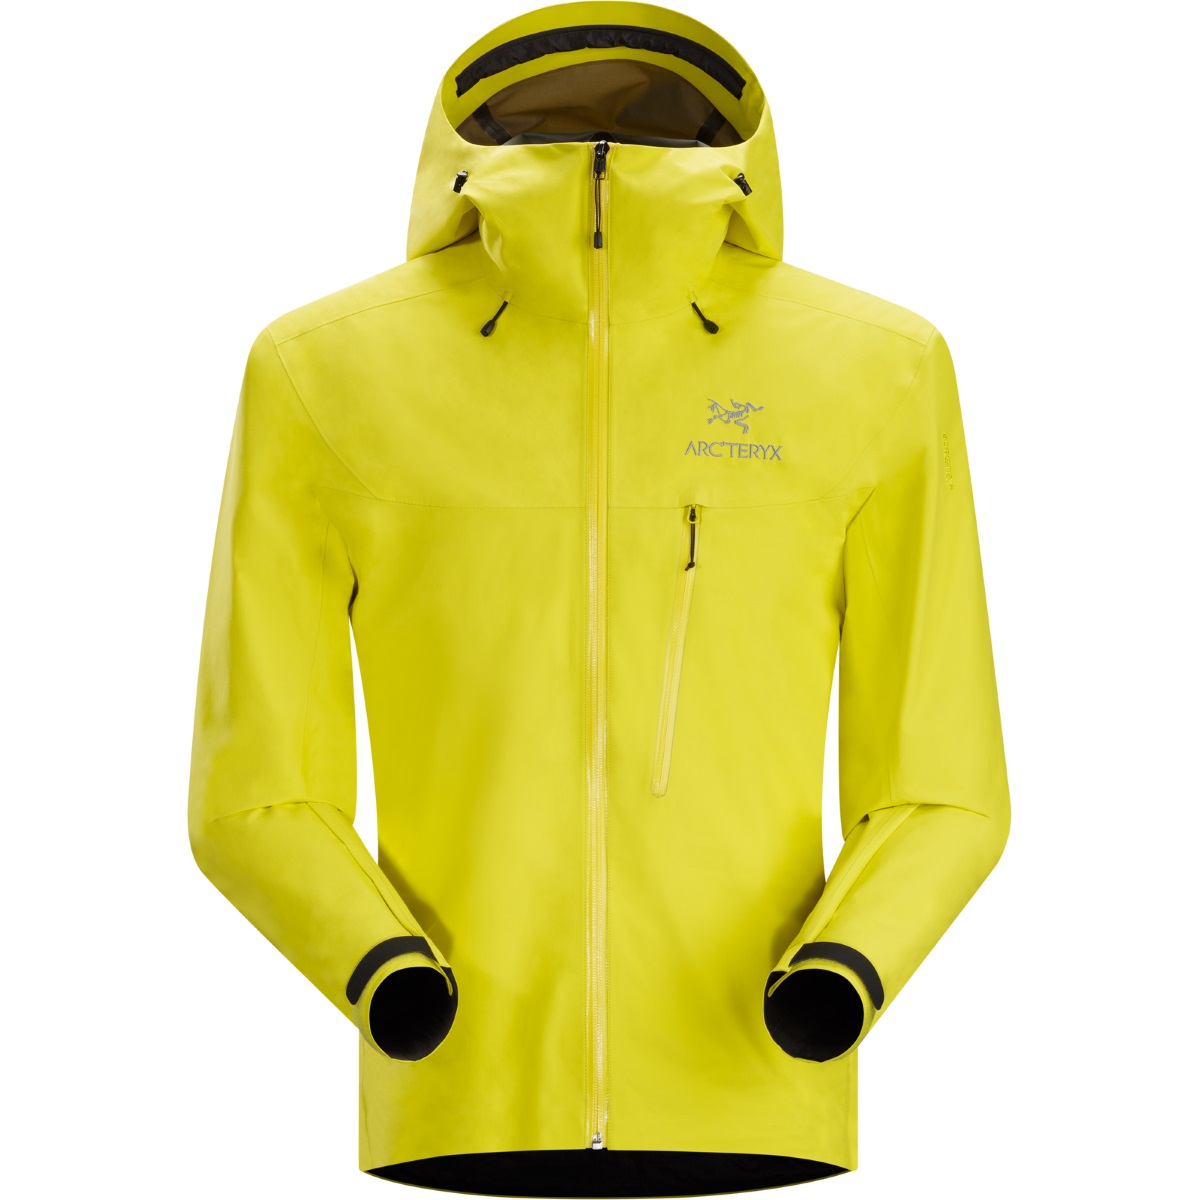 Arc'teryx Alpha SL Jacket, men's, discontinued Fall 2015 colors (free ...